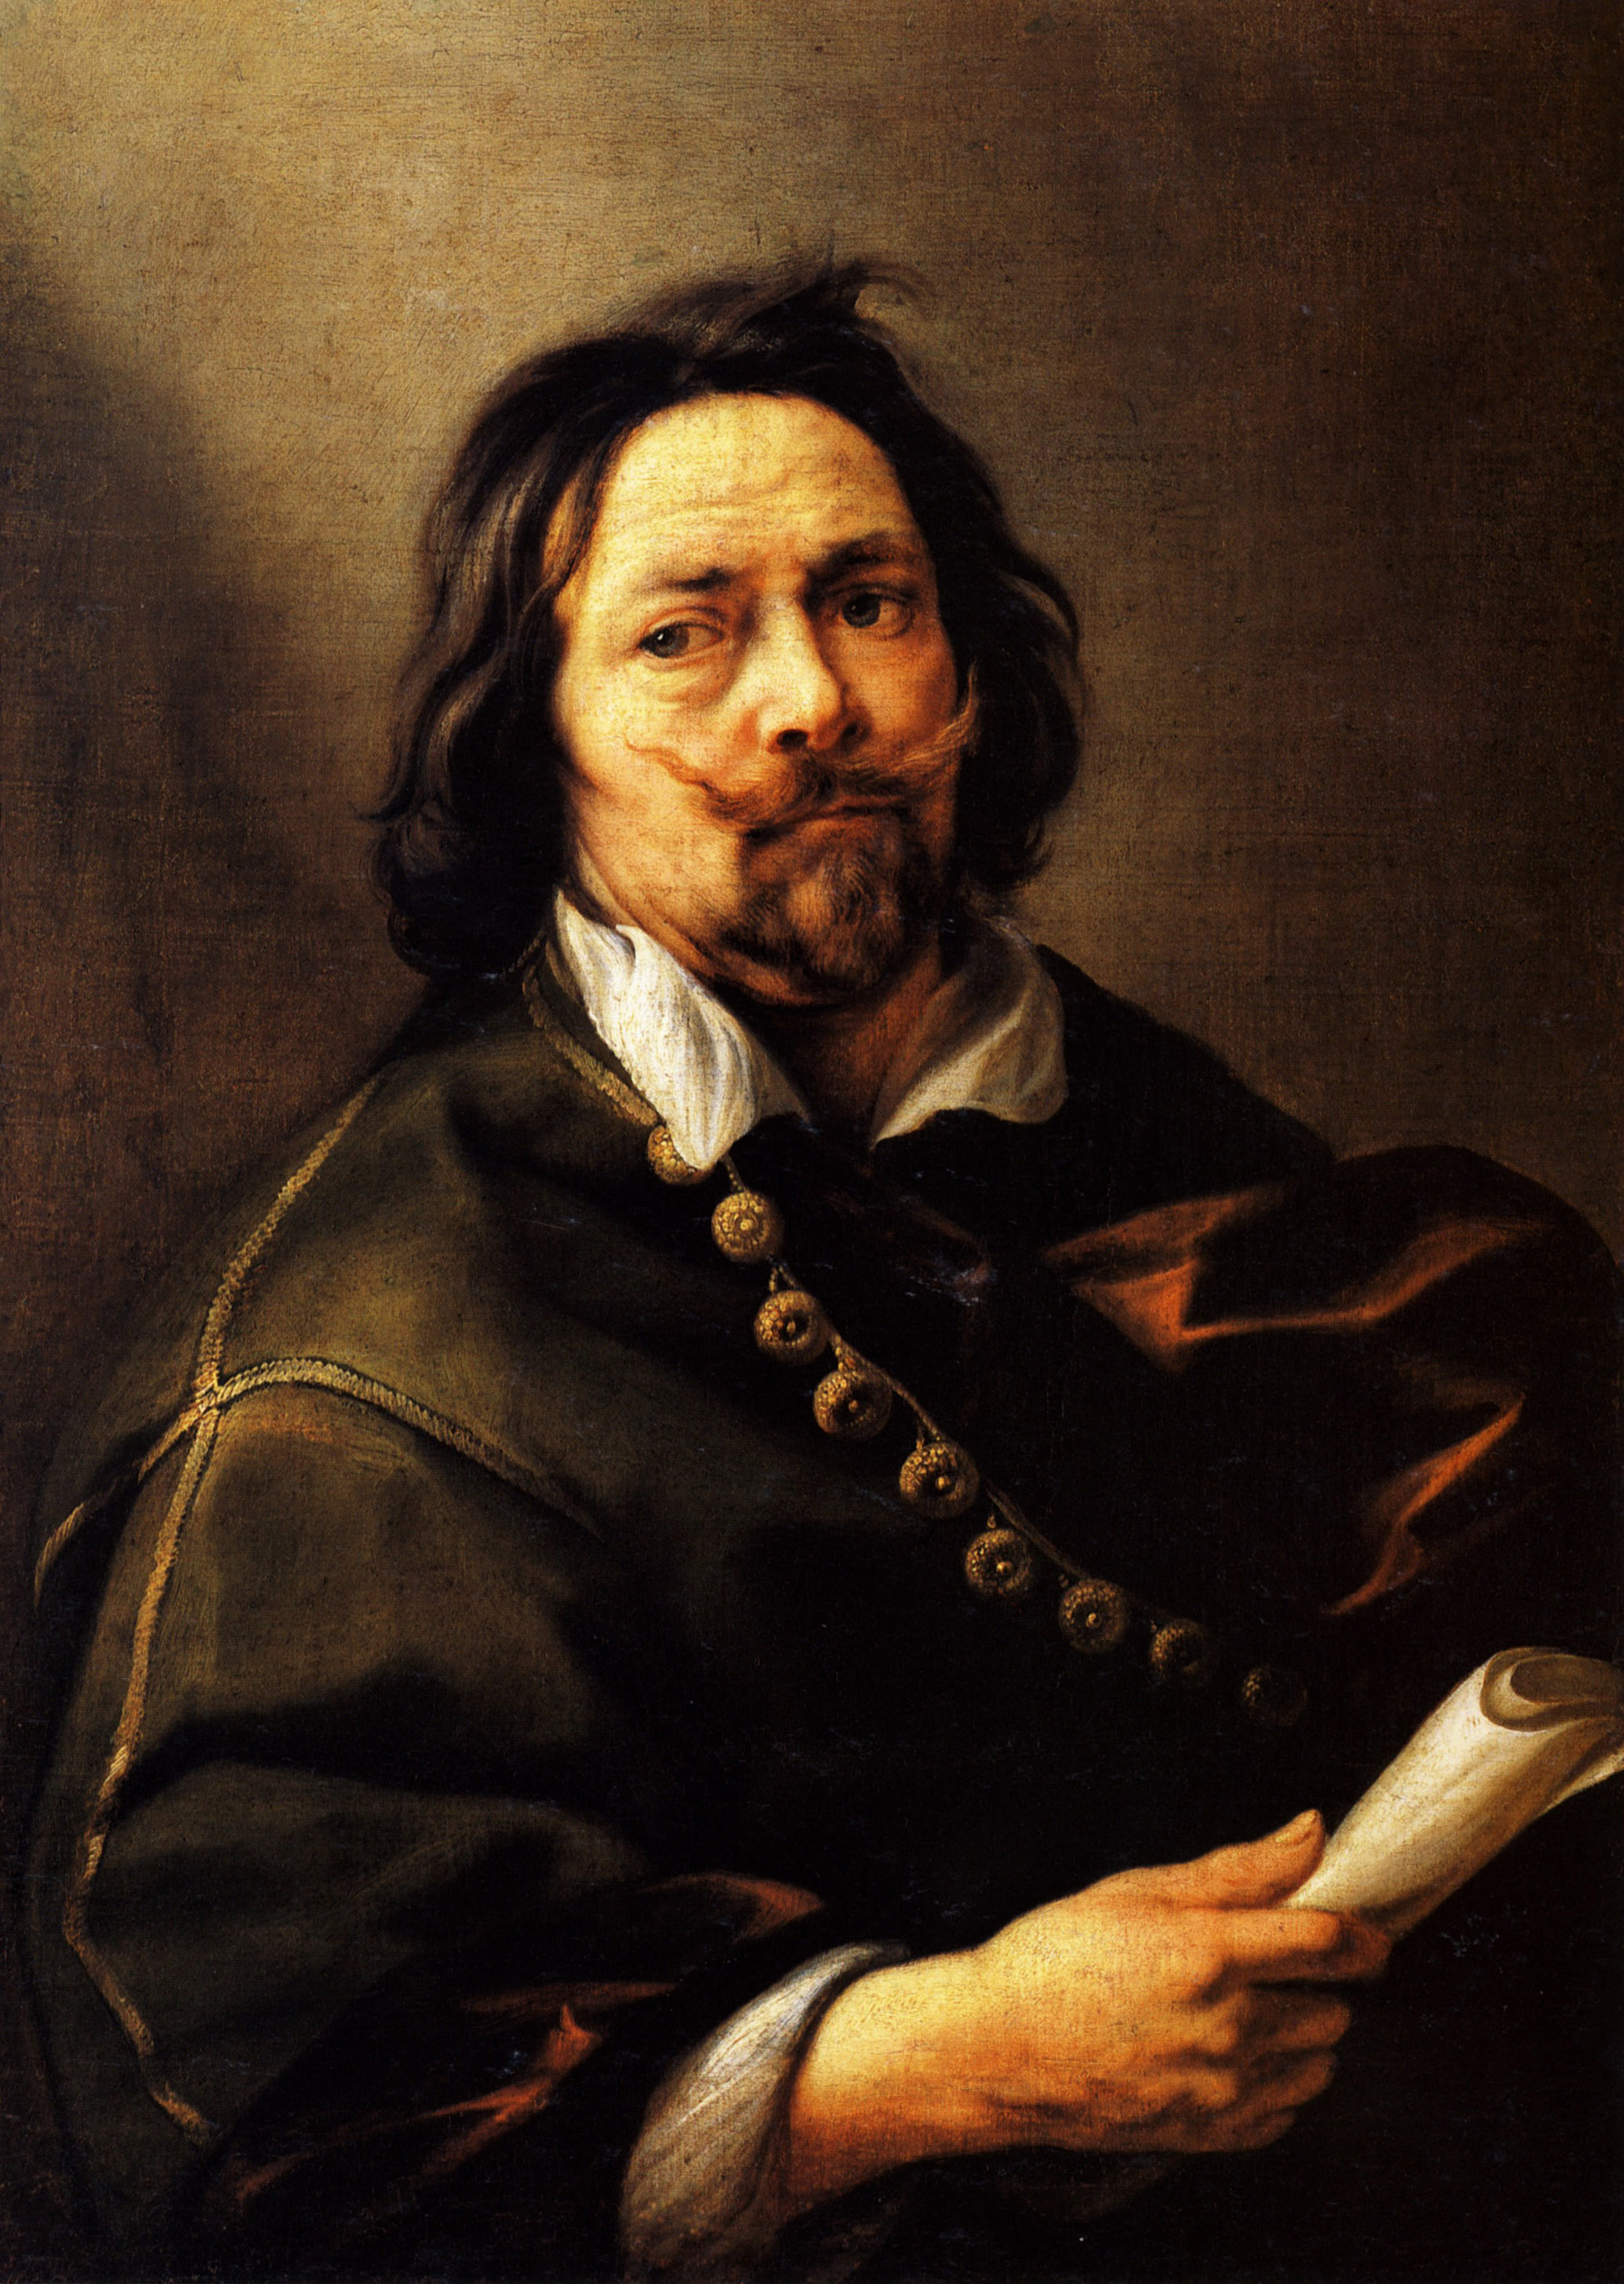 Jacob Jordaens - May 19, 1593 - October 18, 1678